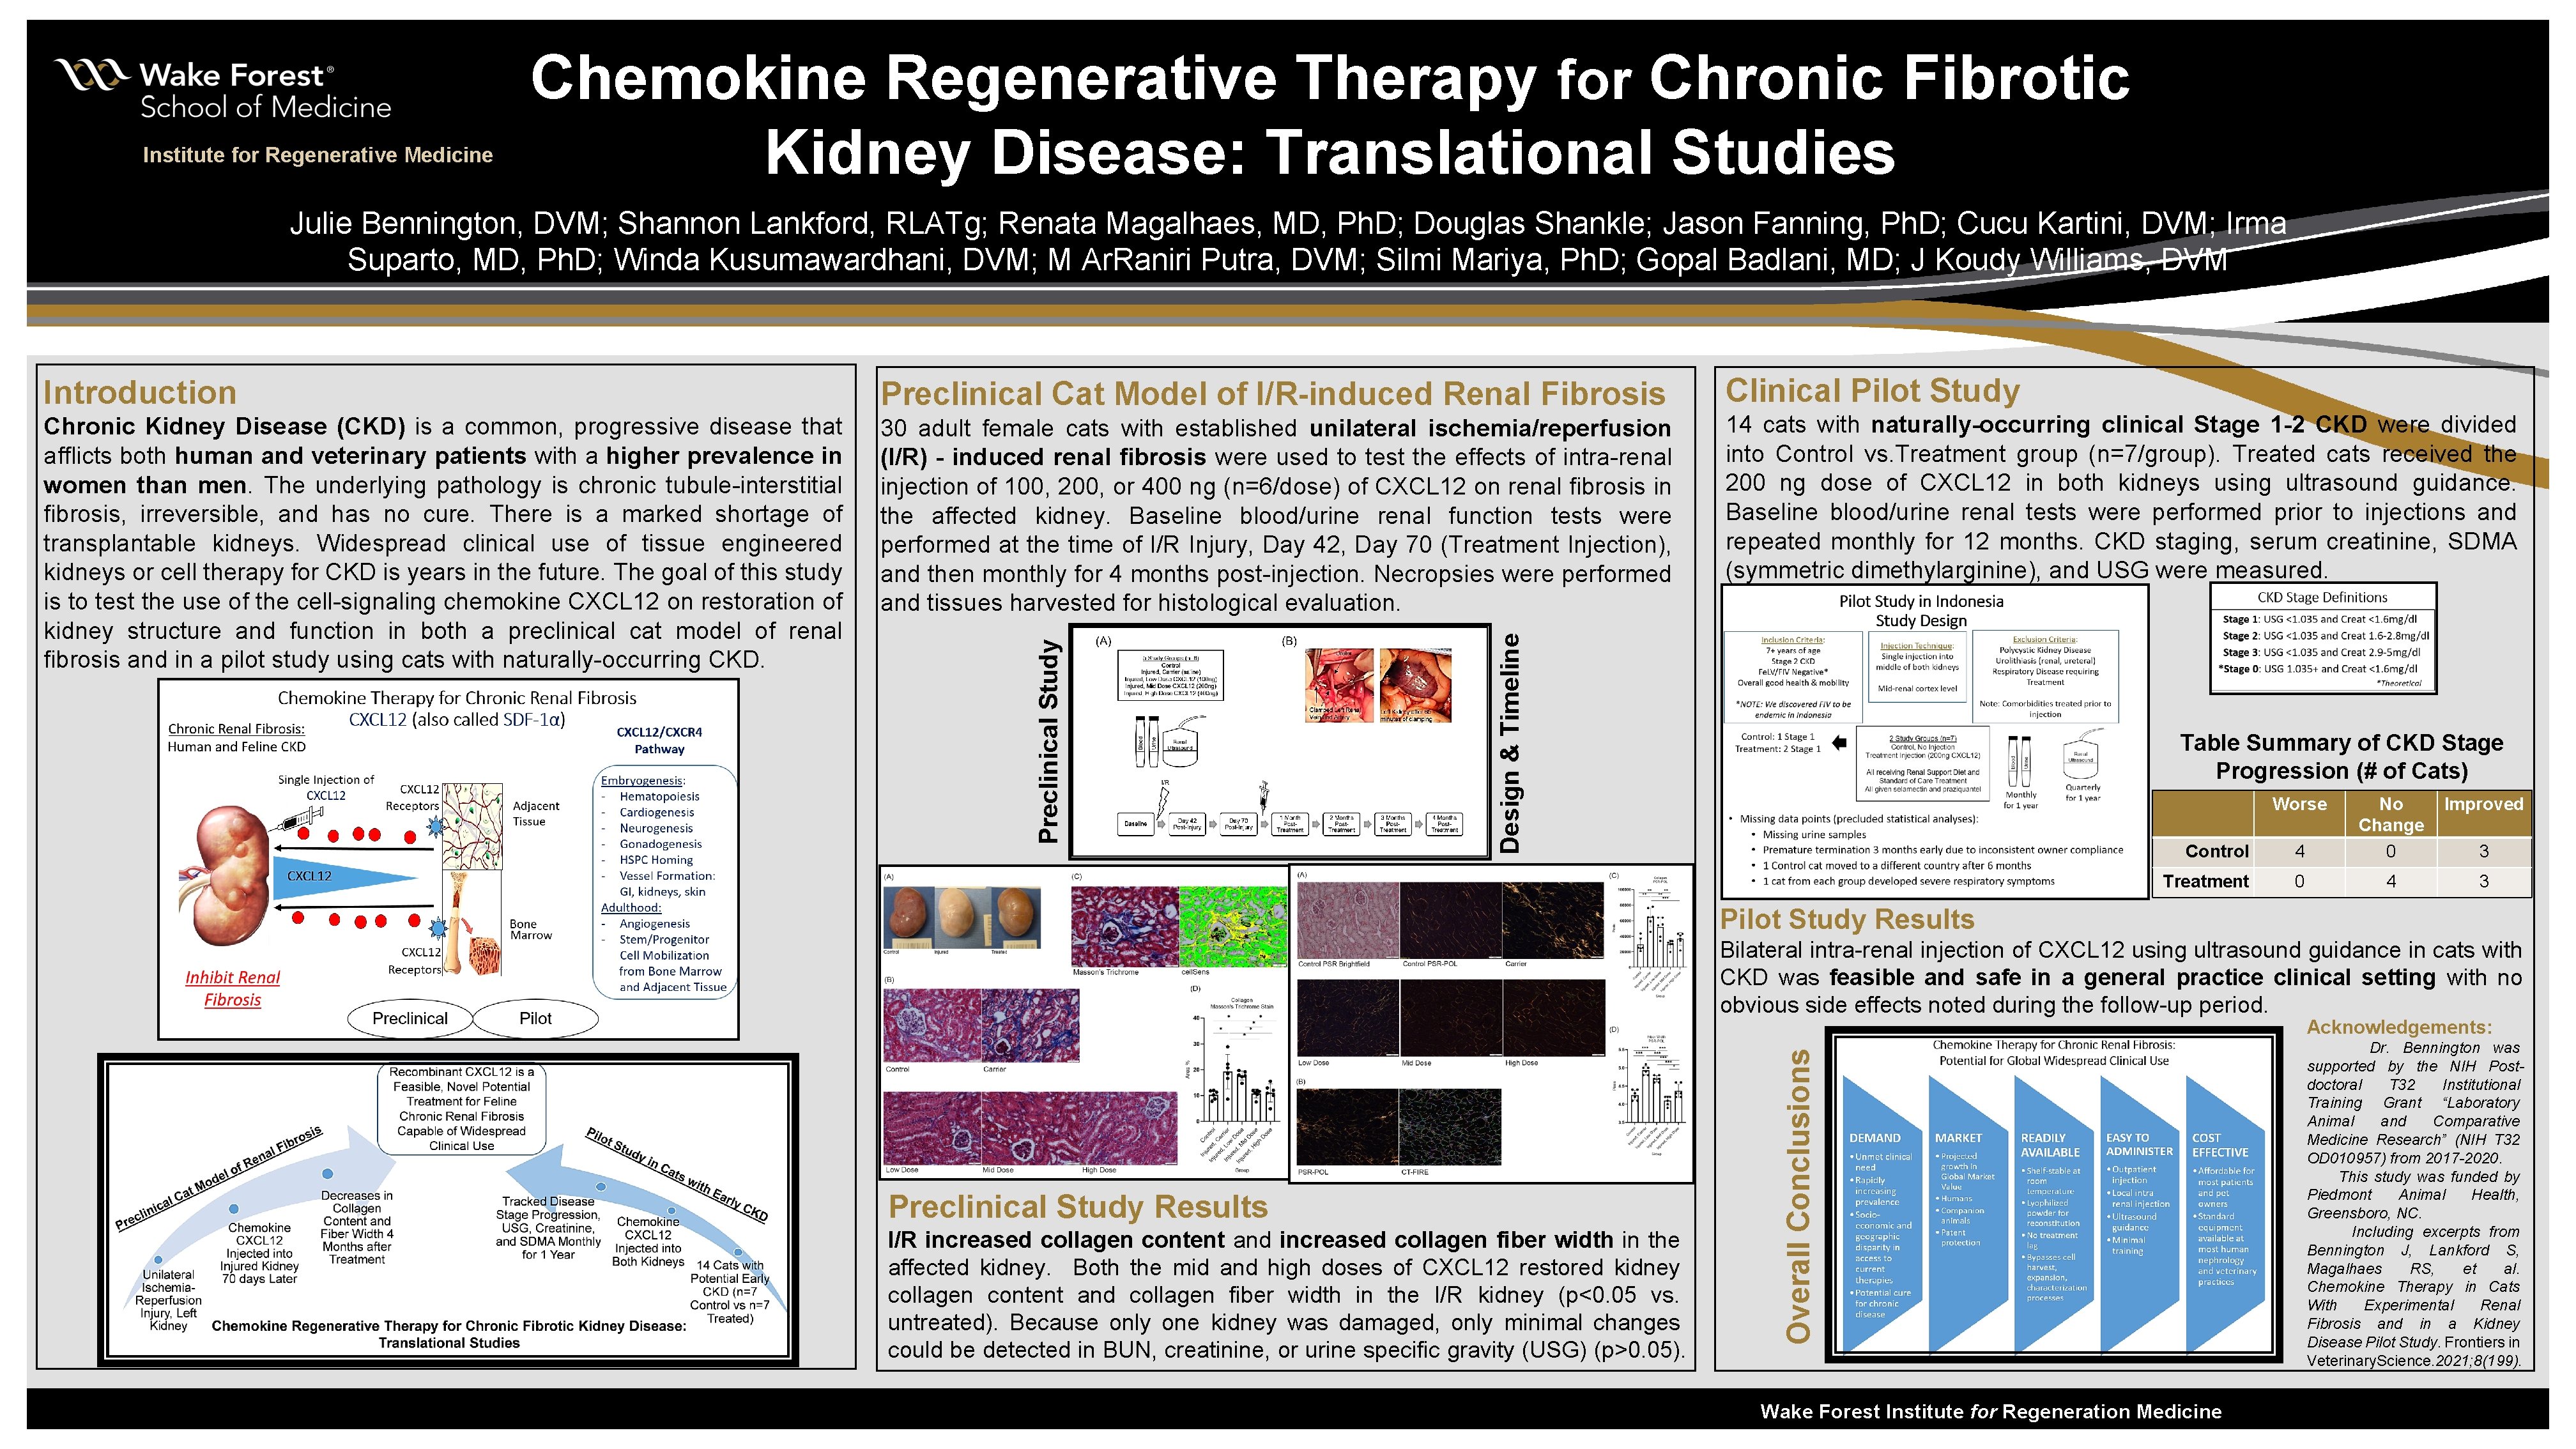 Institute for Regenerative Medicine Chemokine Regenerative Therapy for Chronic Fibrotic Kidney Disease: Translational Studies